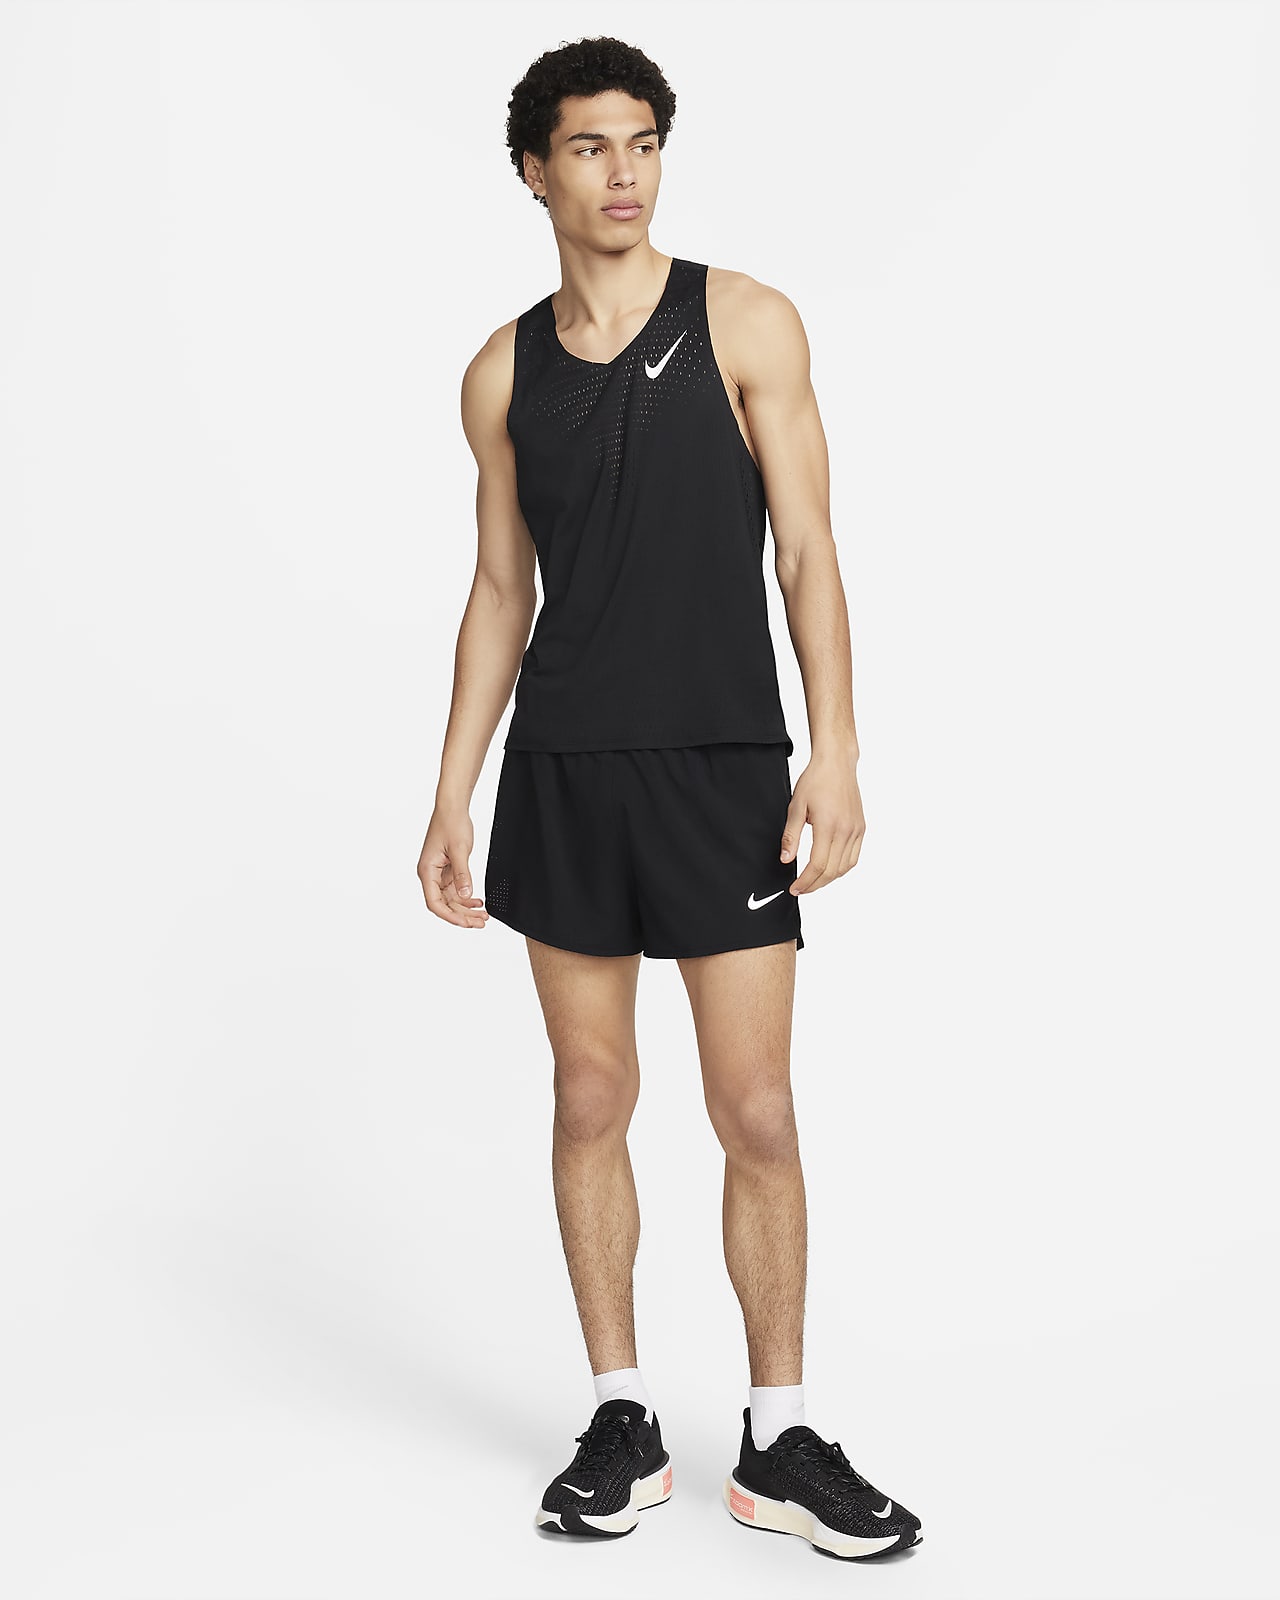 Men's Nike Dri-Fit Advanced Aeroswift Tight – The Runners Shop Canberra